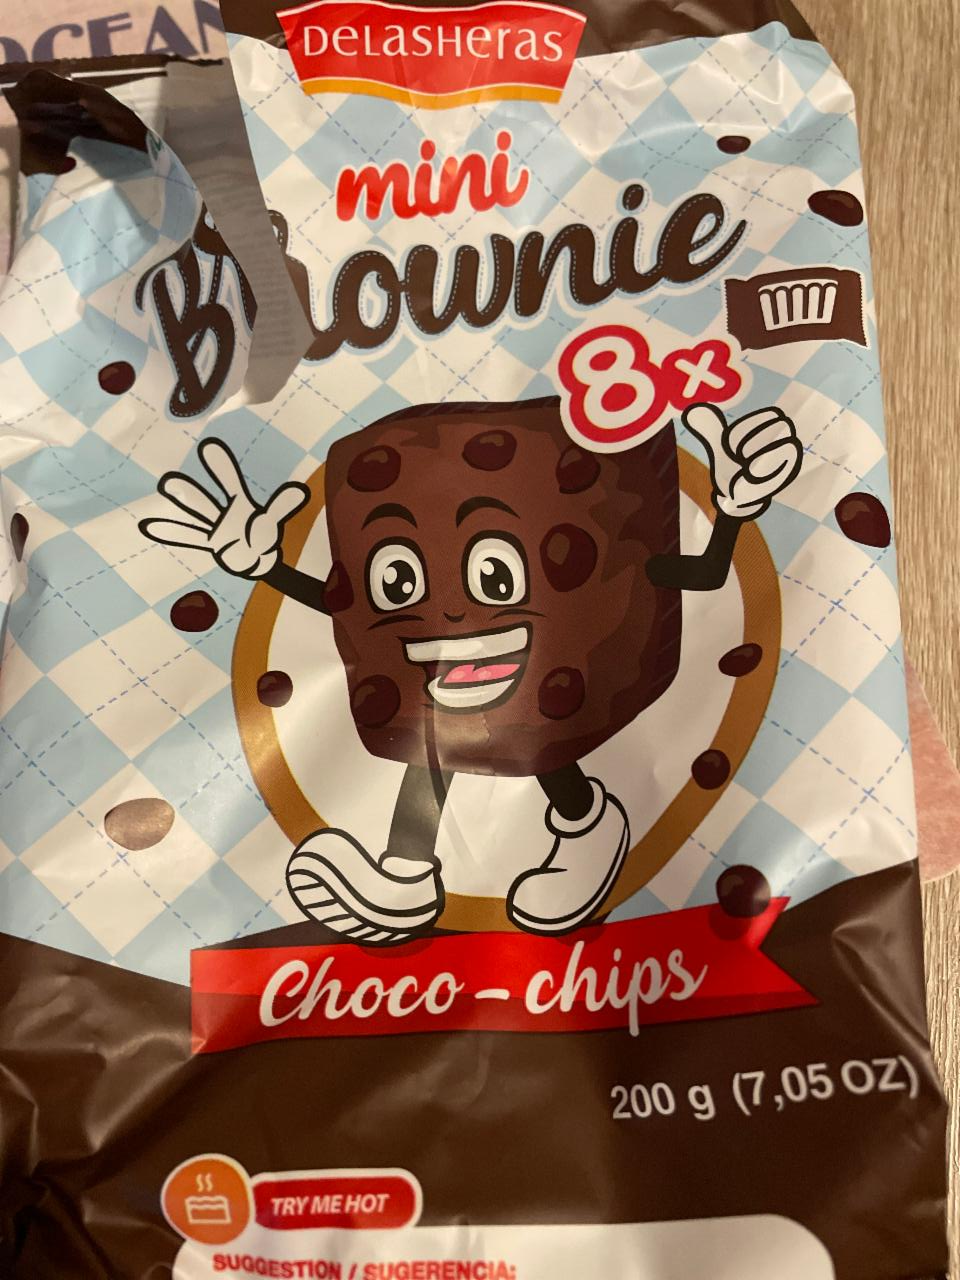 Képek - Mini brownie Choco - chips Delasheras